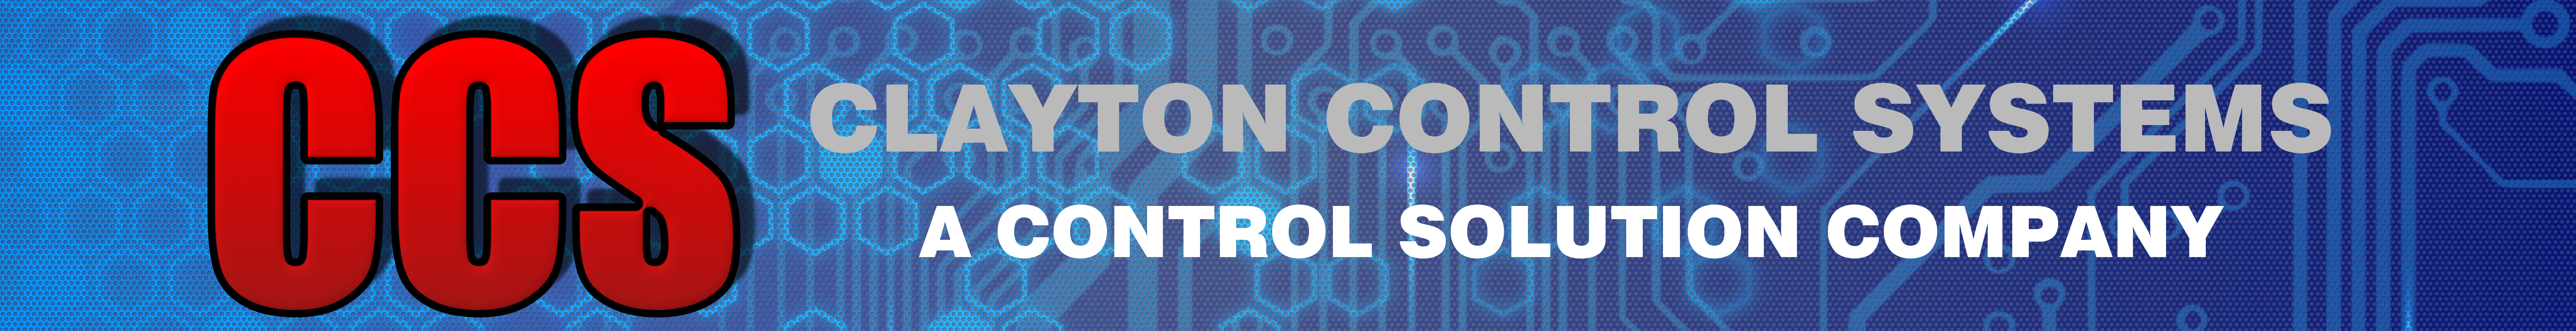 Clayton Control Systems - CCS - Clayton Controls - Instrumentation – Controls – Control Panels - SCADA